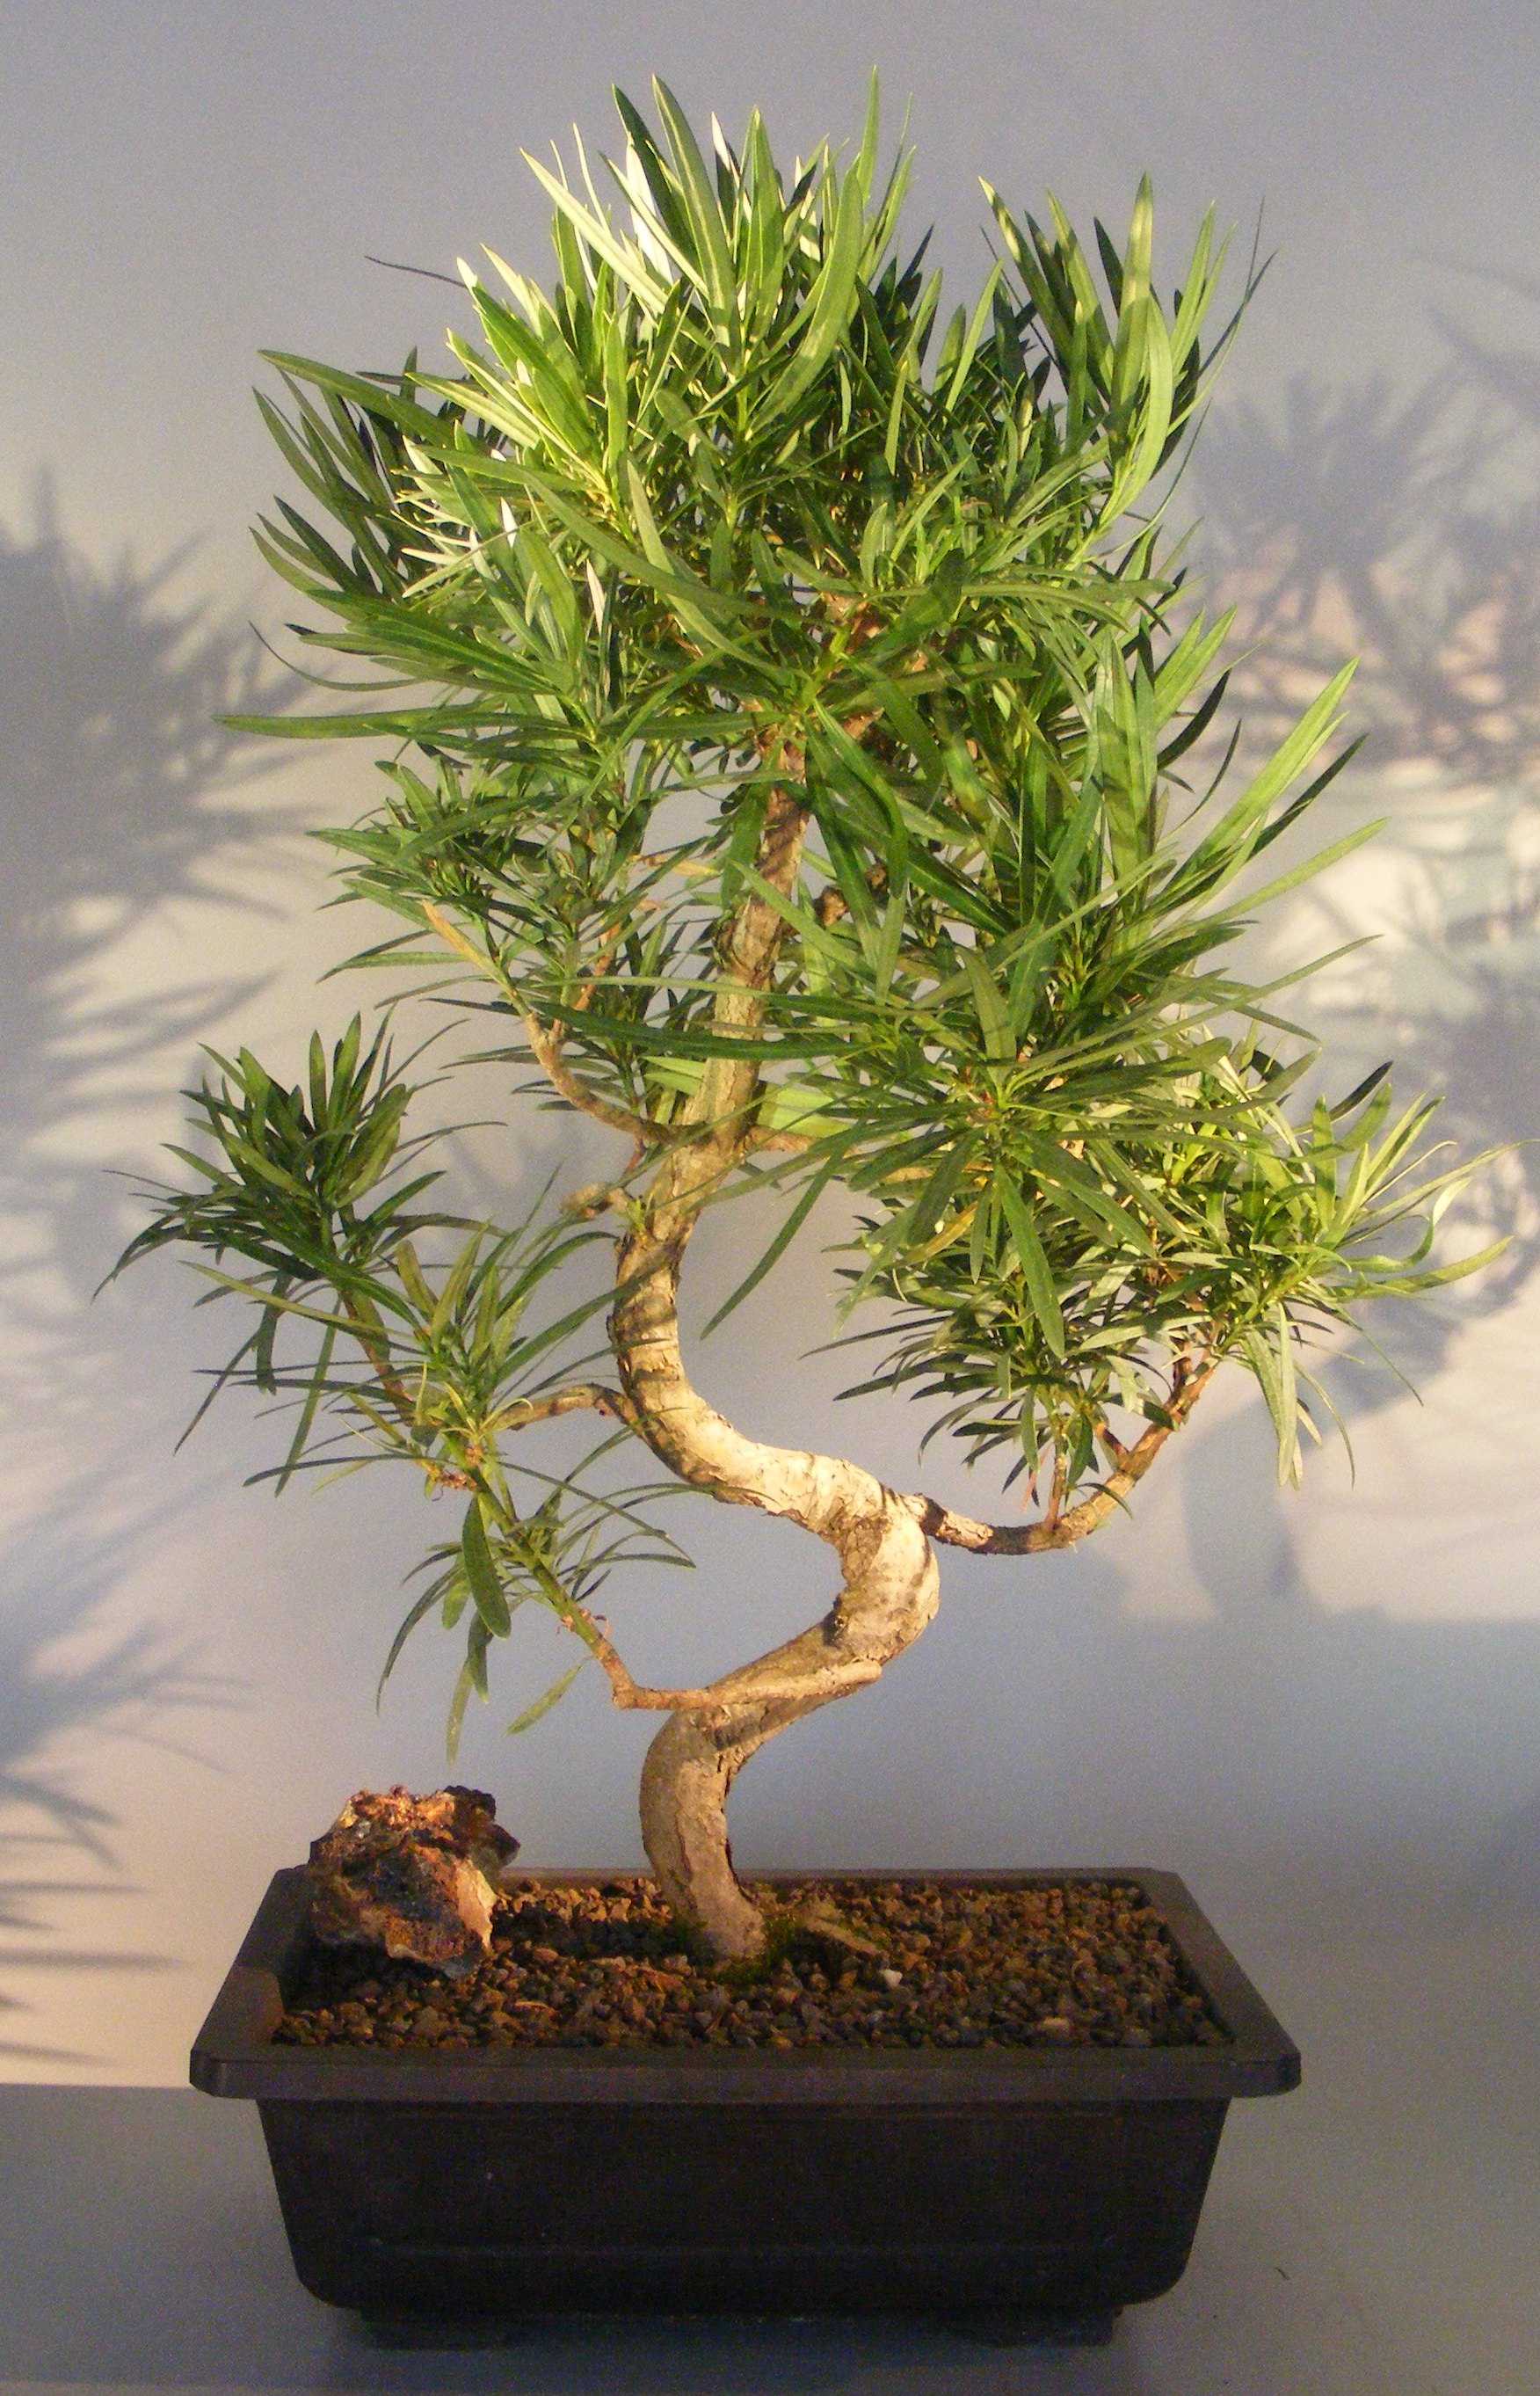 Flowering Podocarpus Bonsai Tree Curved Trunk Style(podocarpus macrophyllus) Image